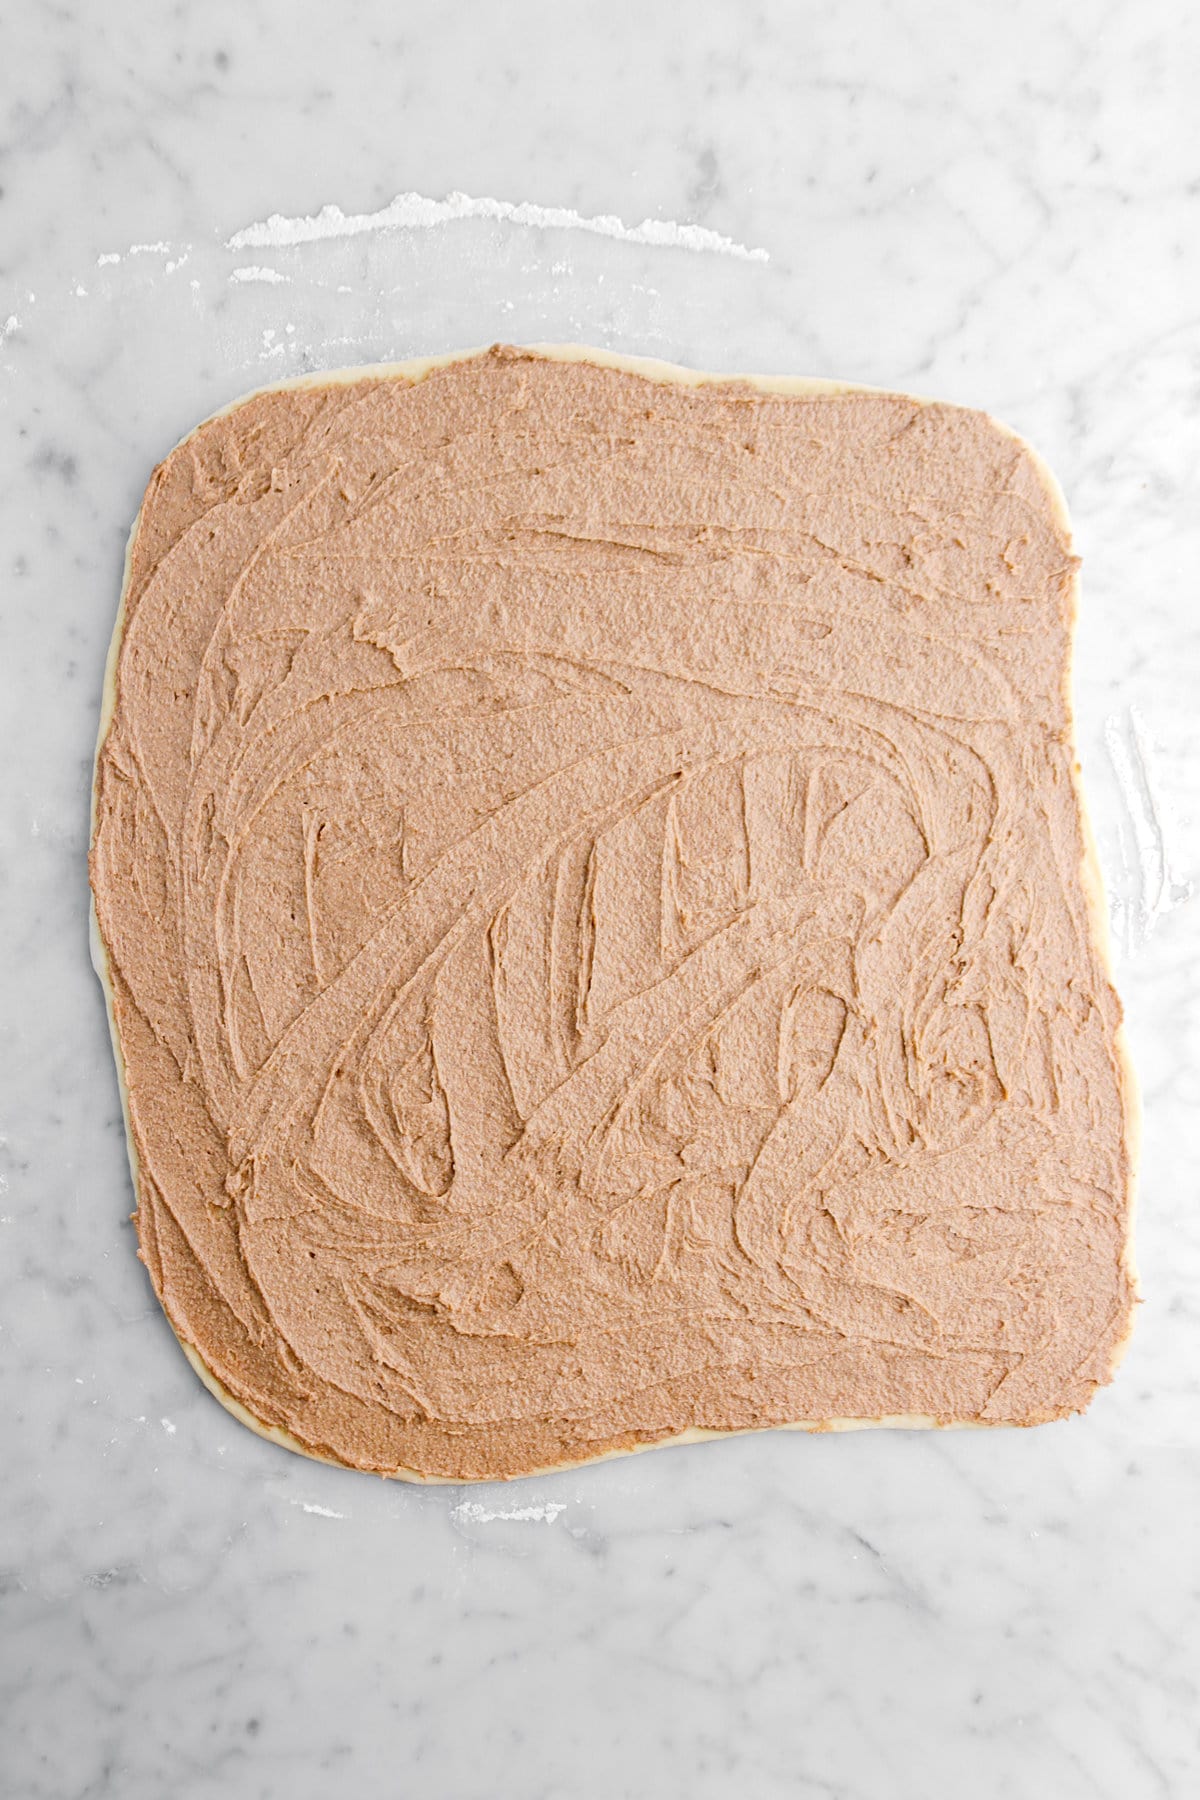 cinnamon butter spread across dough.